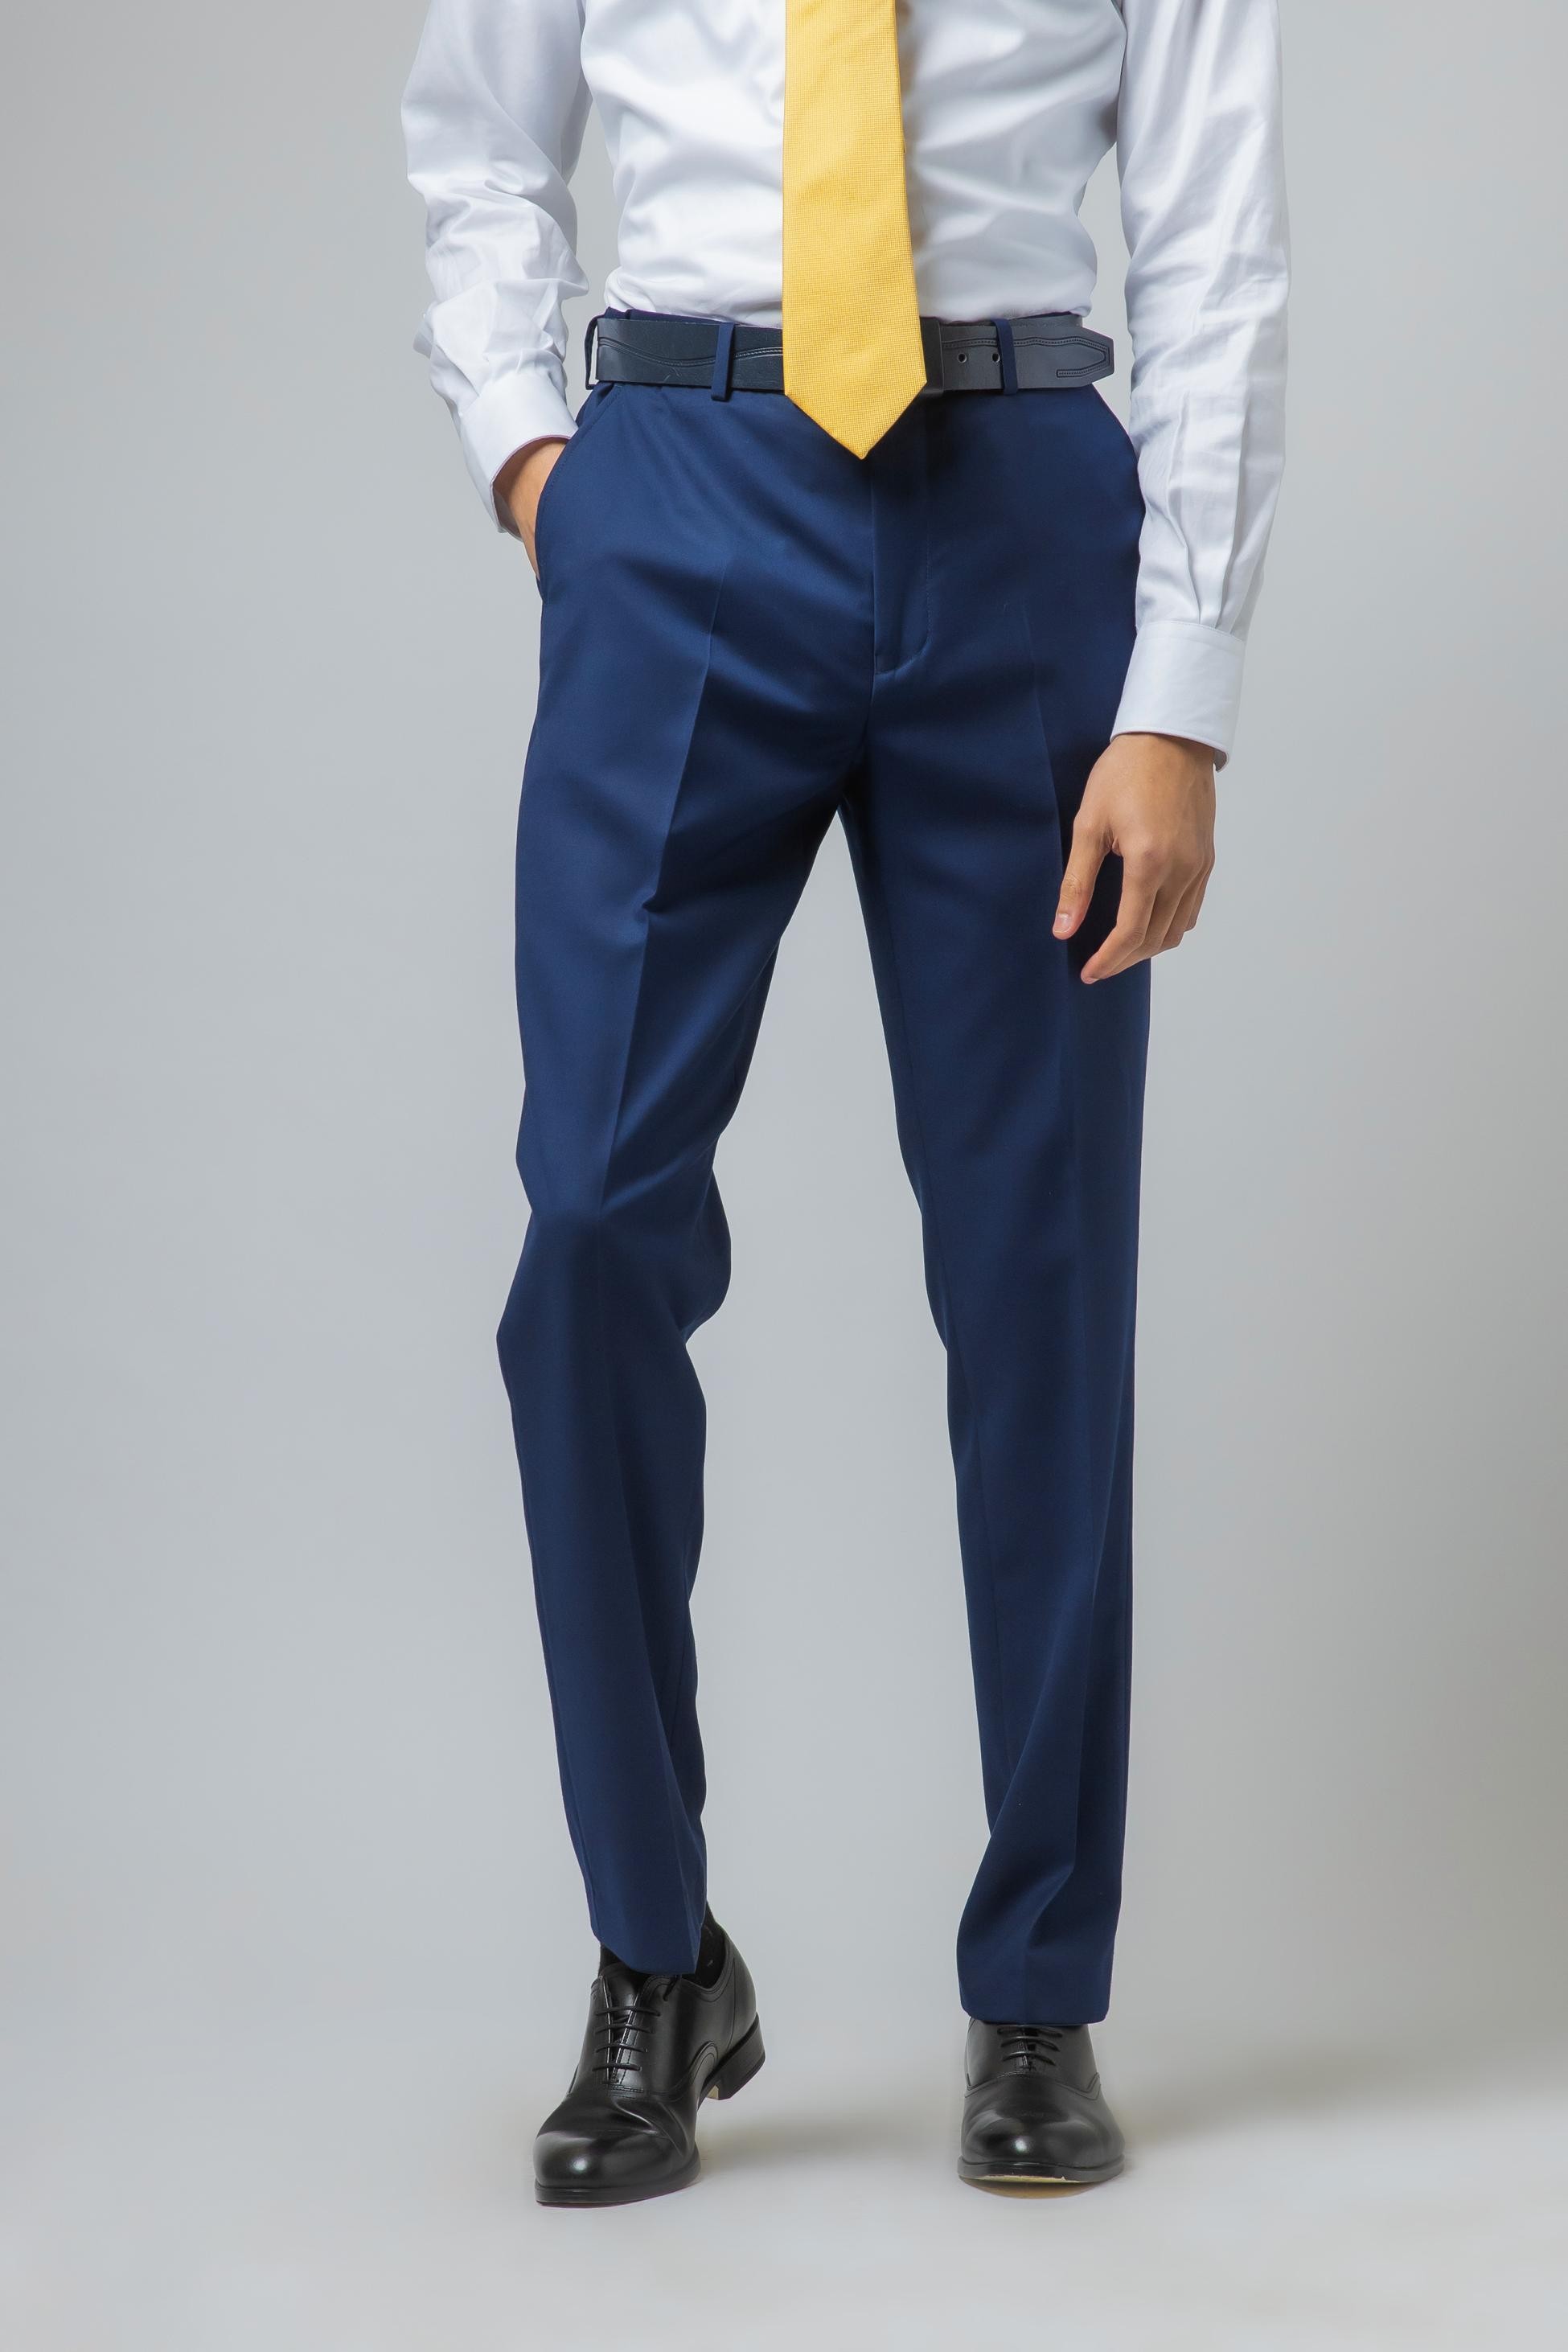 Pantalon slim bleu marine pour hommes - ISAAC